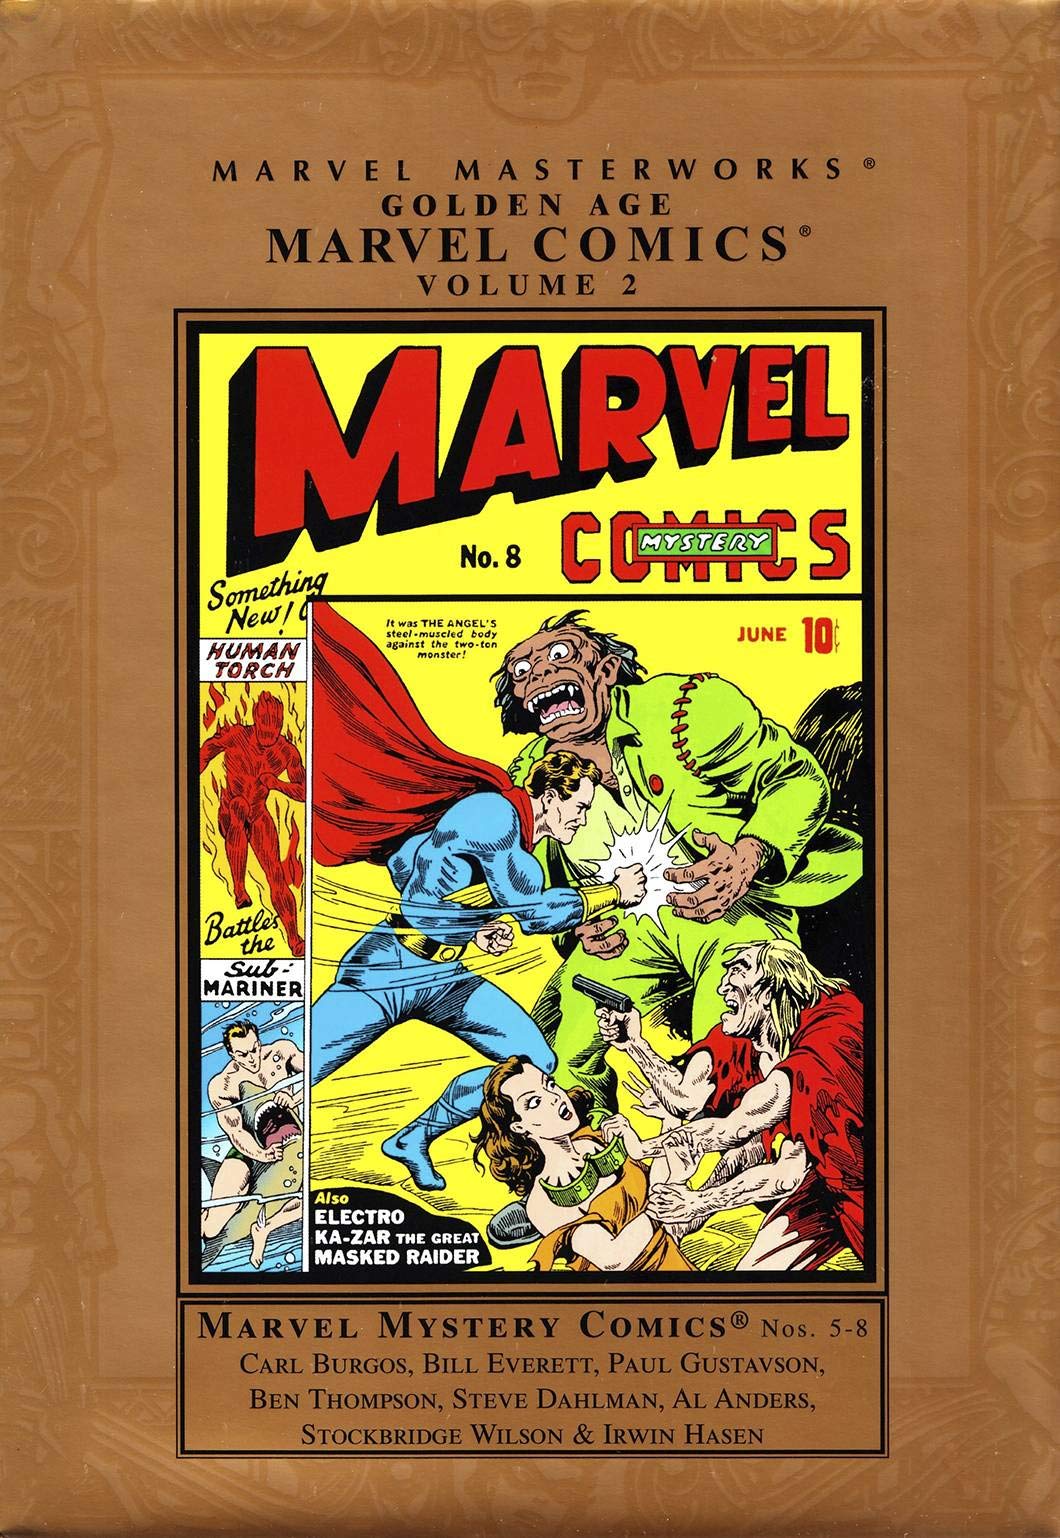 Marvel Masterworks Golden Age Marvel Comics Volume 2